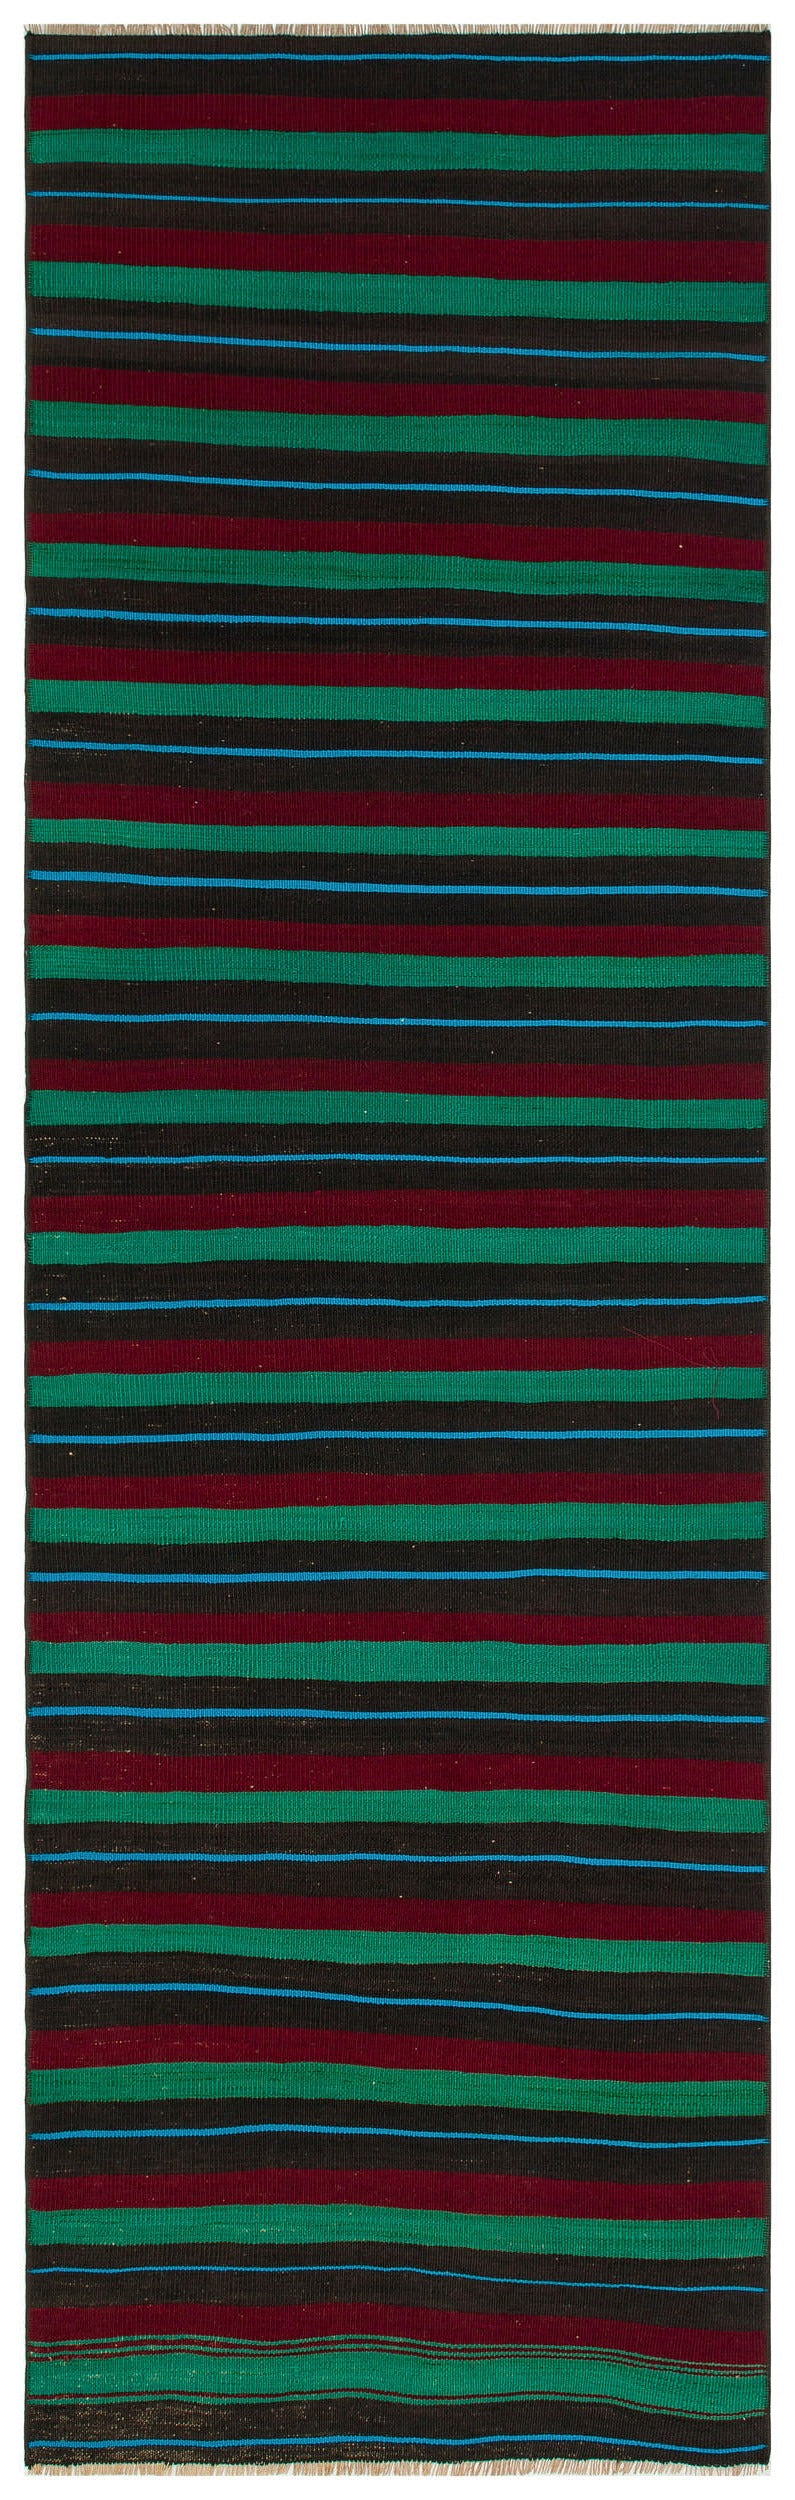 Cretan Brown Striped Wool Hand-Woven Carpet 074 x 255